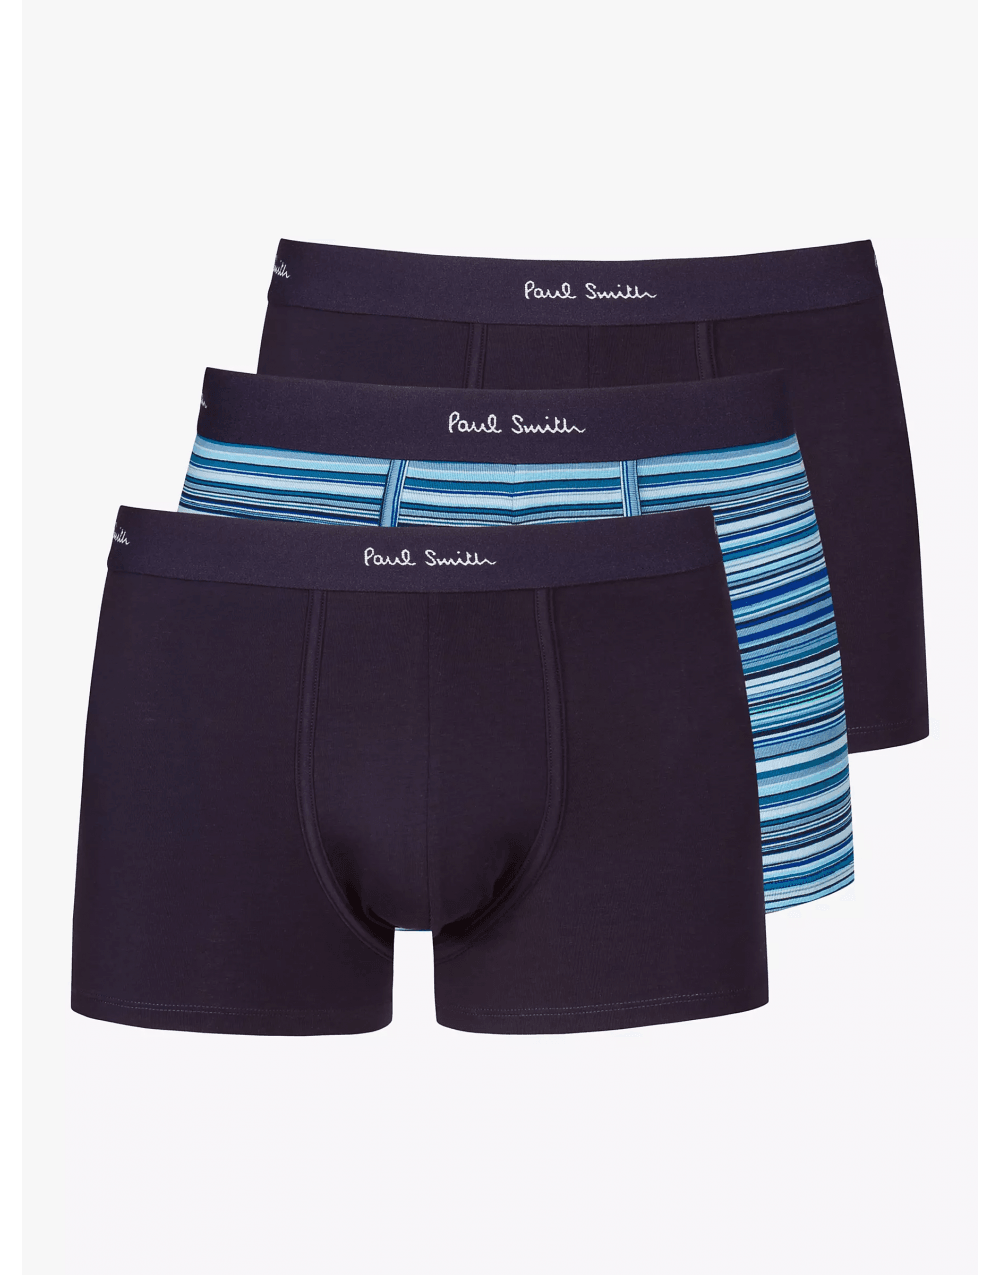 Paul Smith 3 Pack Underwear Col: Black/blue Stripe/black, Size: Xl